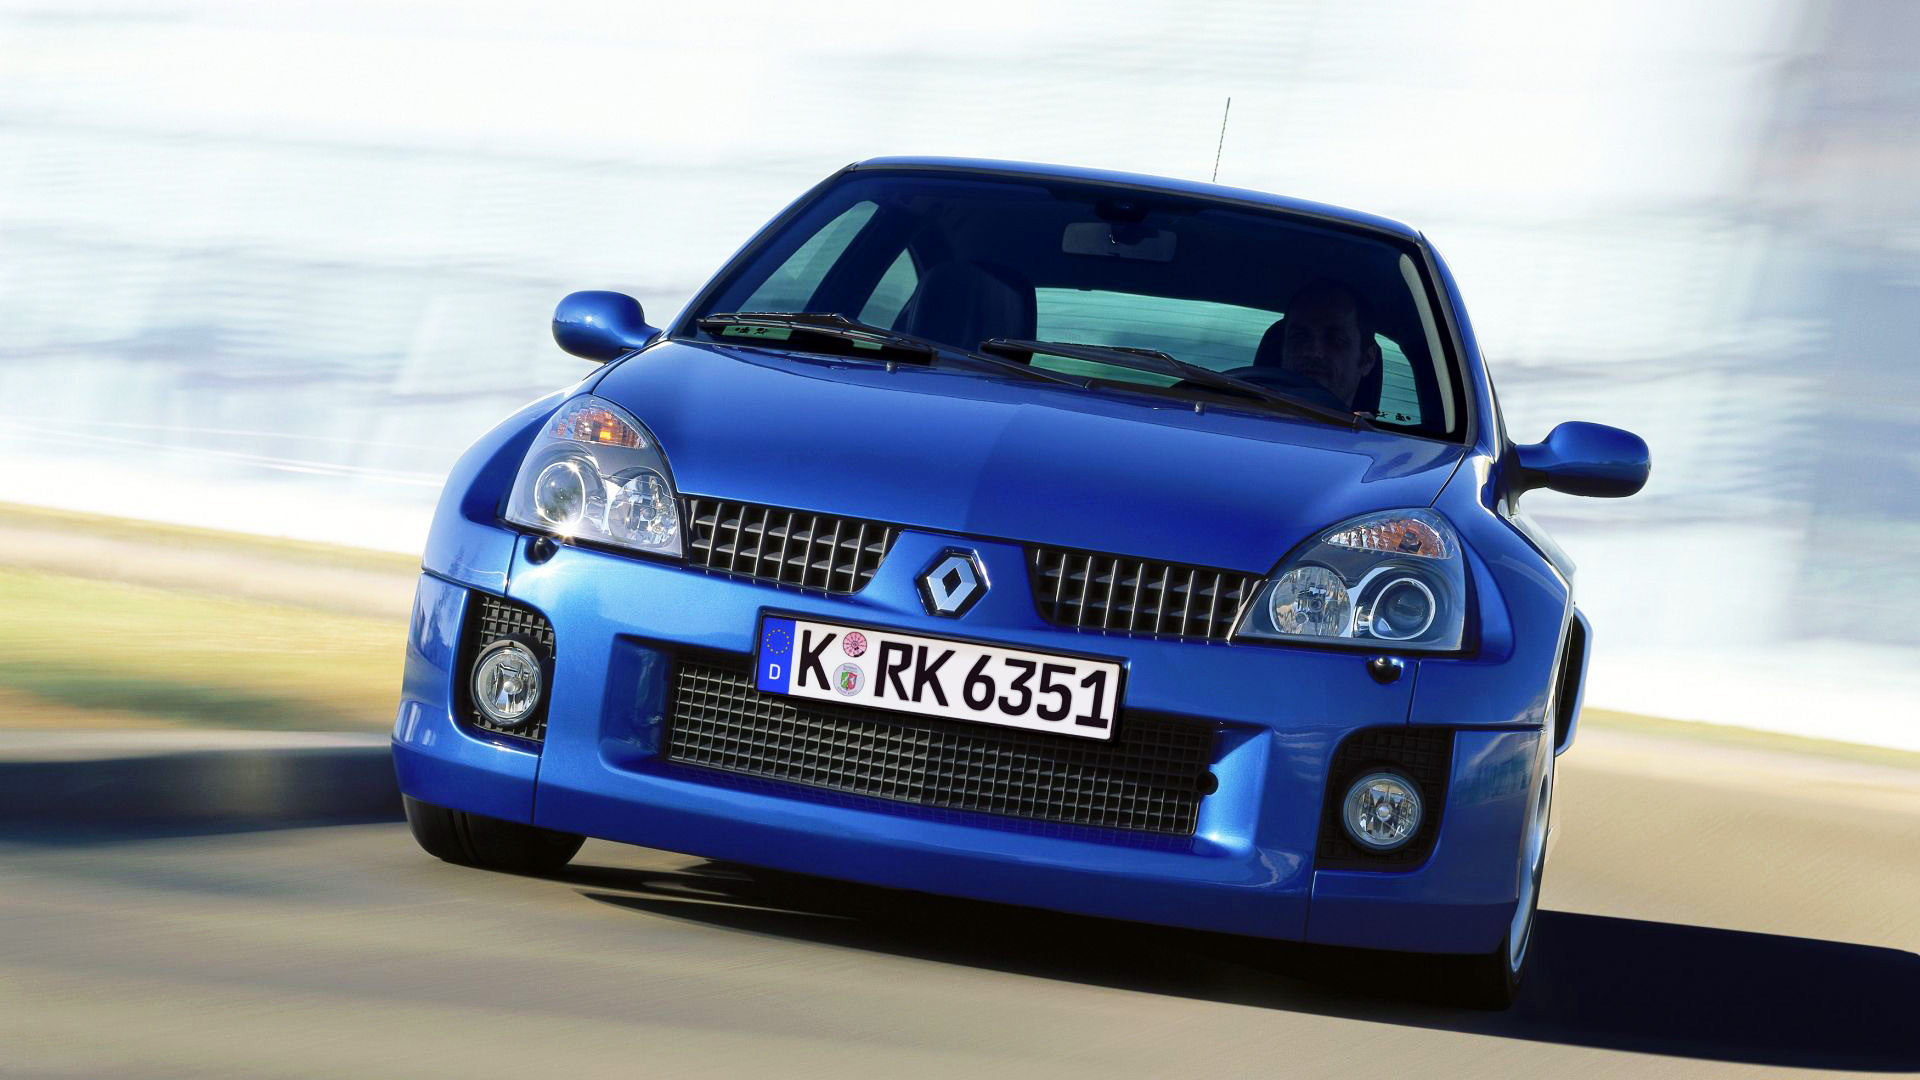  2003 Renault Clio V6 Wallpaper.